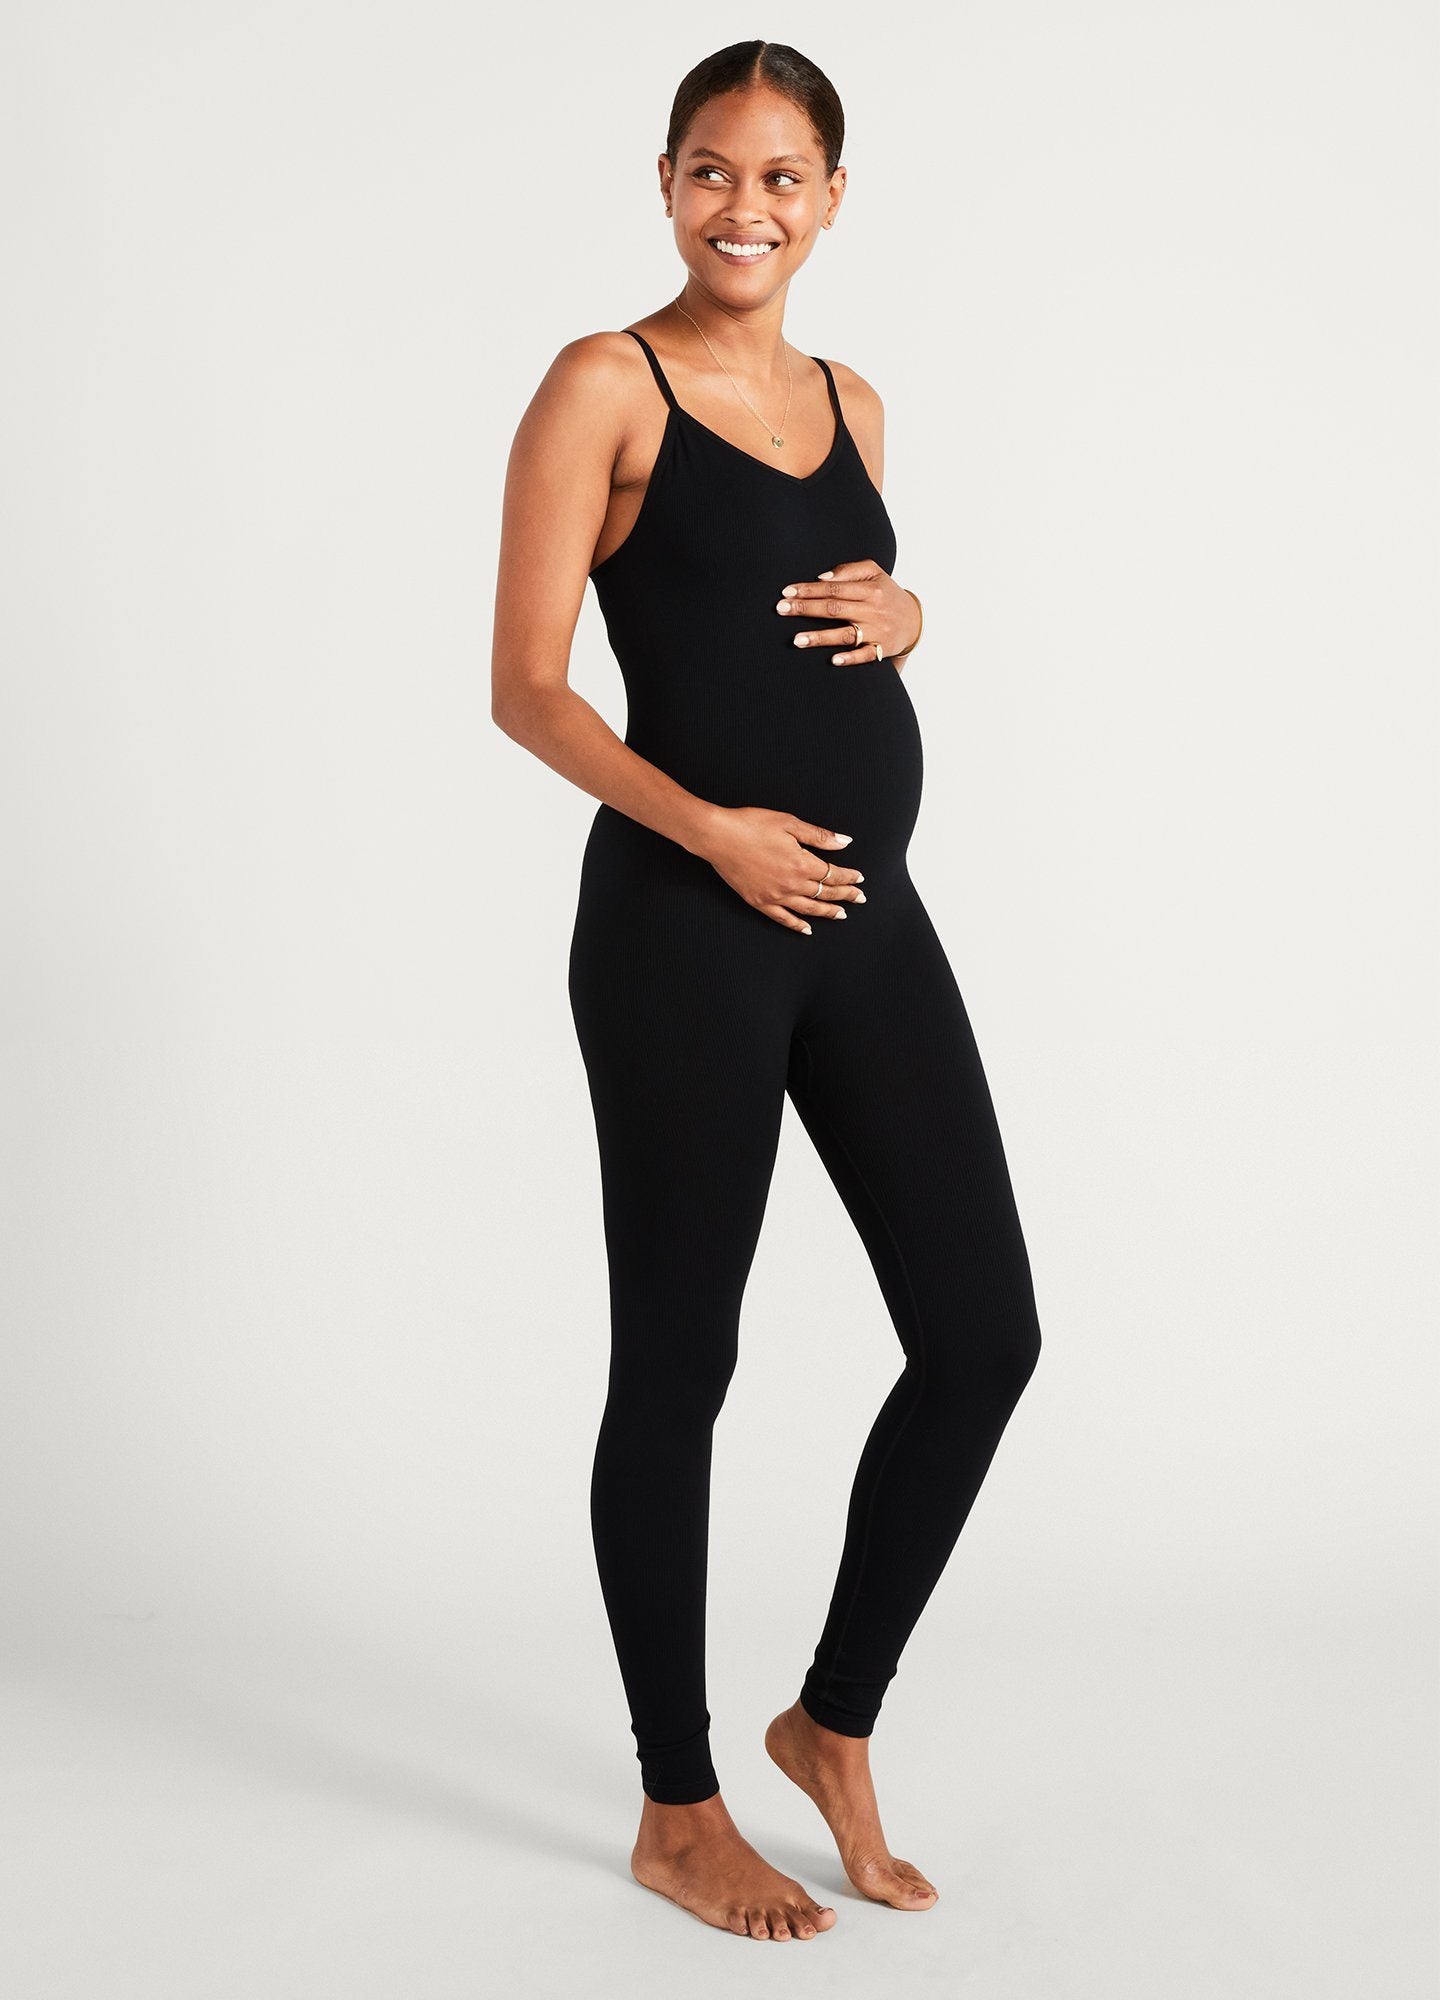 Fall (pregnancy and postpartum) wardrobe essentials - Storq